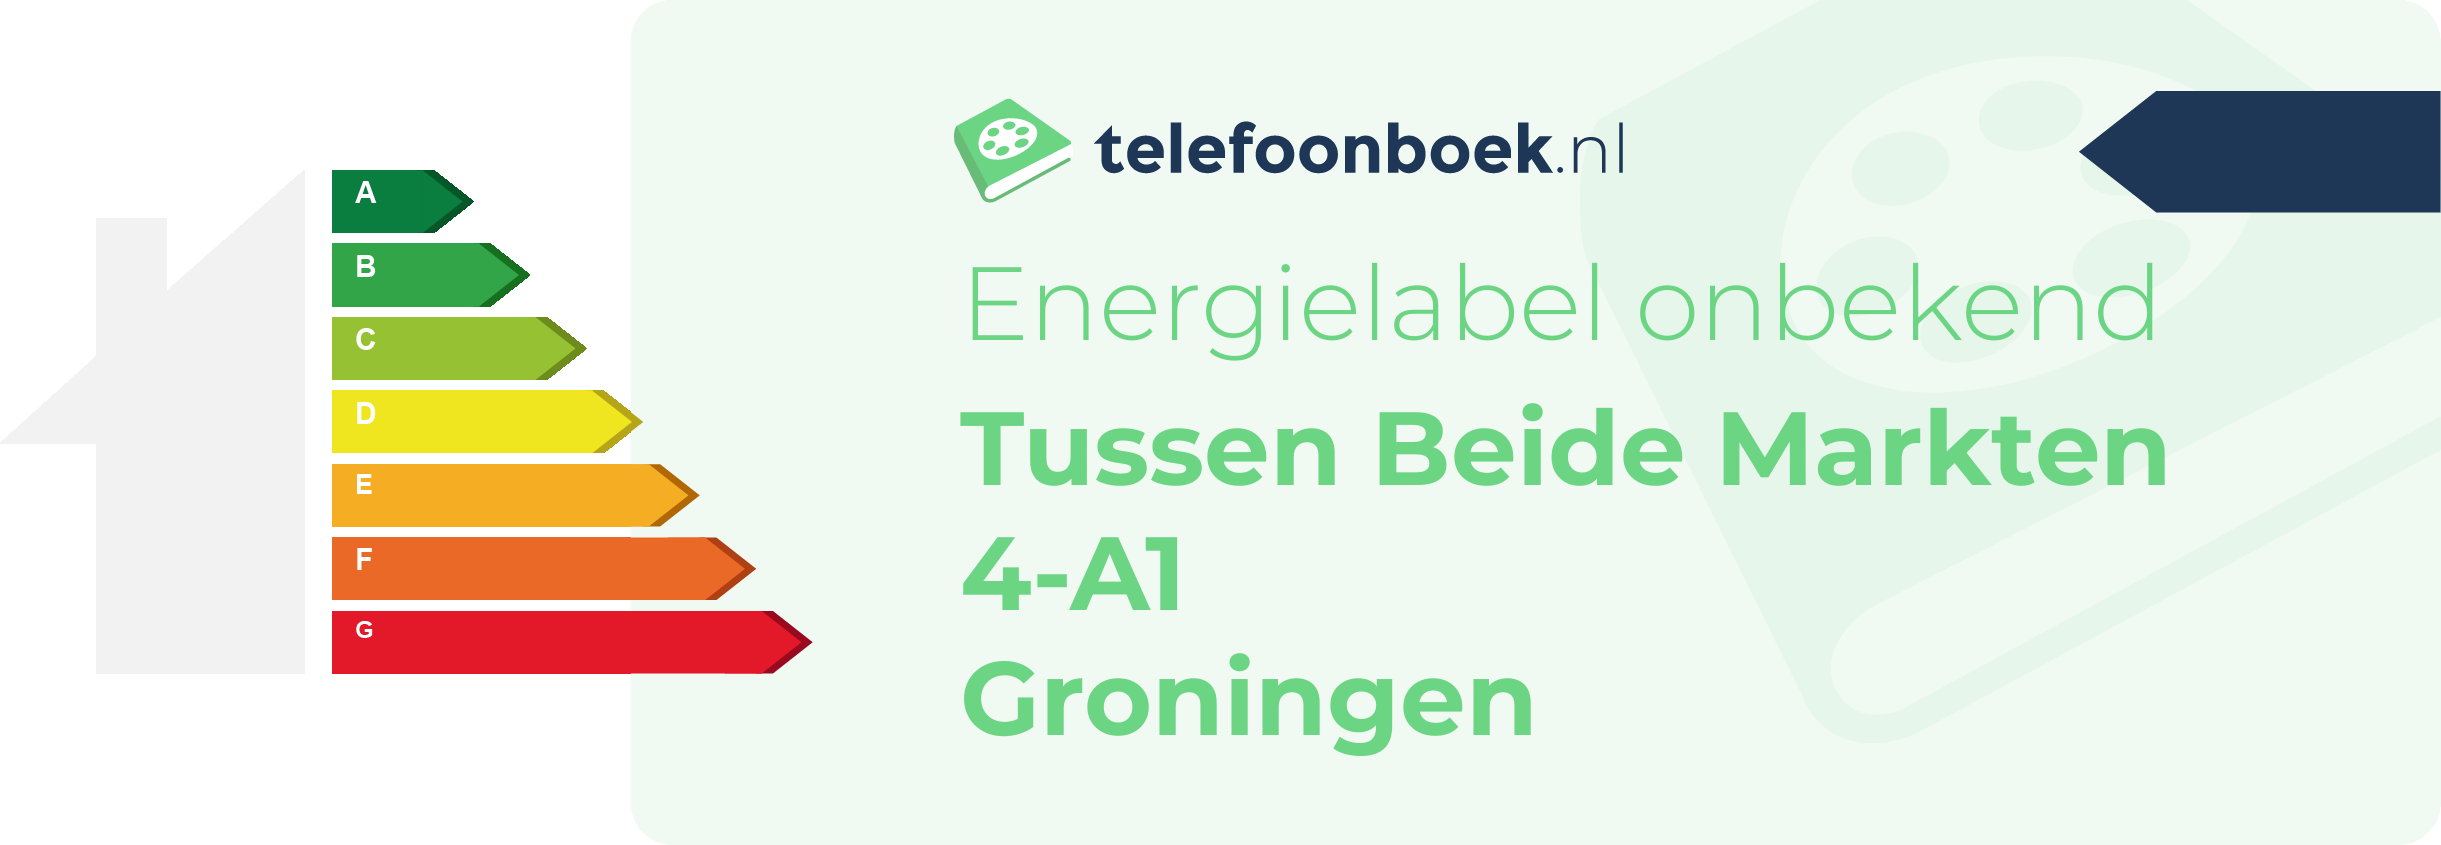 Energielabel Tussen Beide Markten 4-A1 Groningen